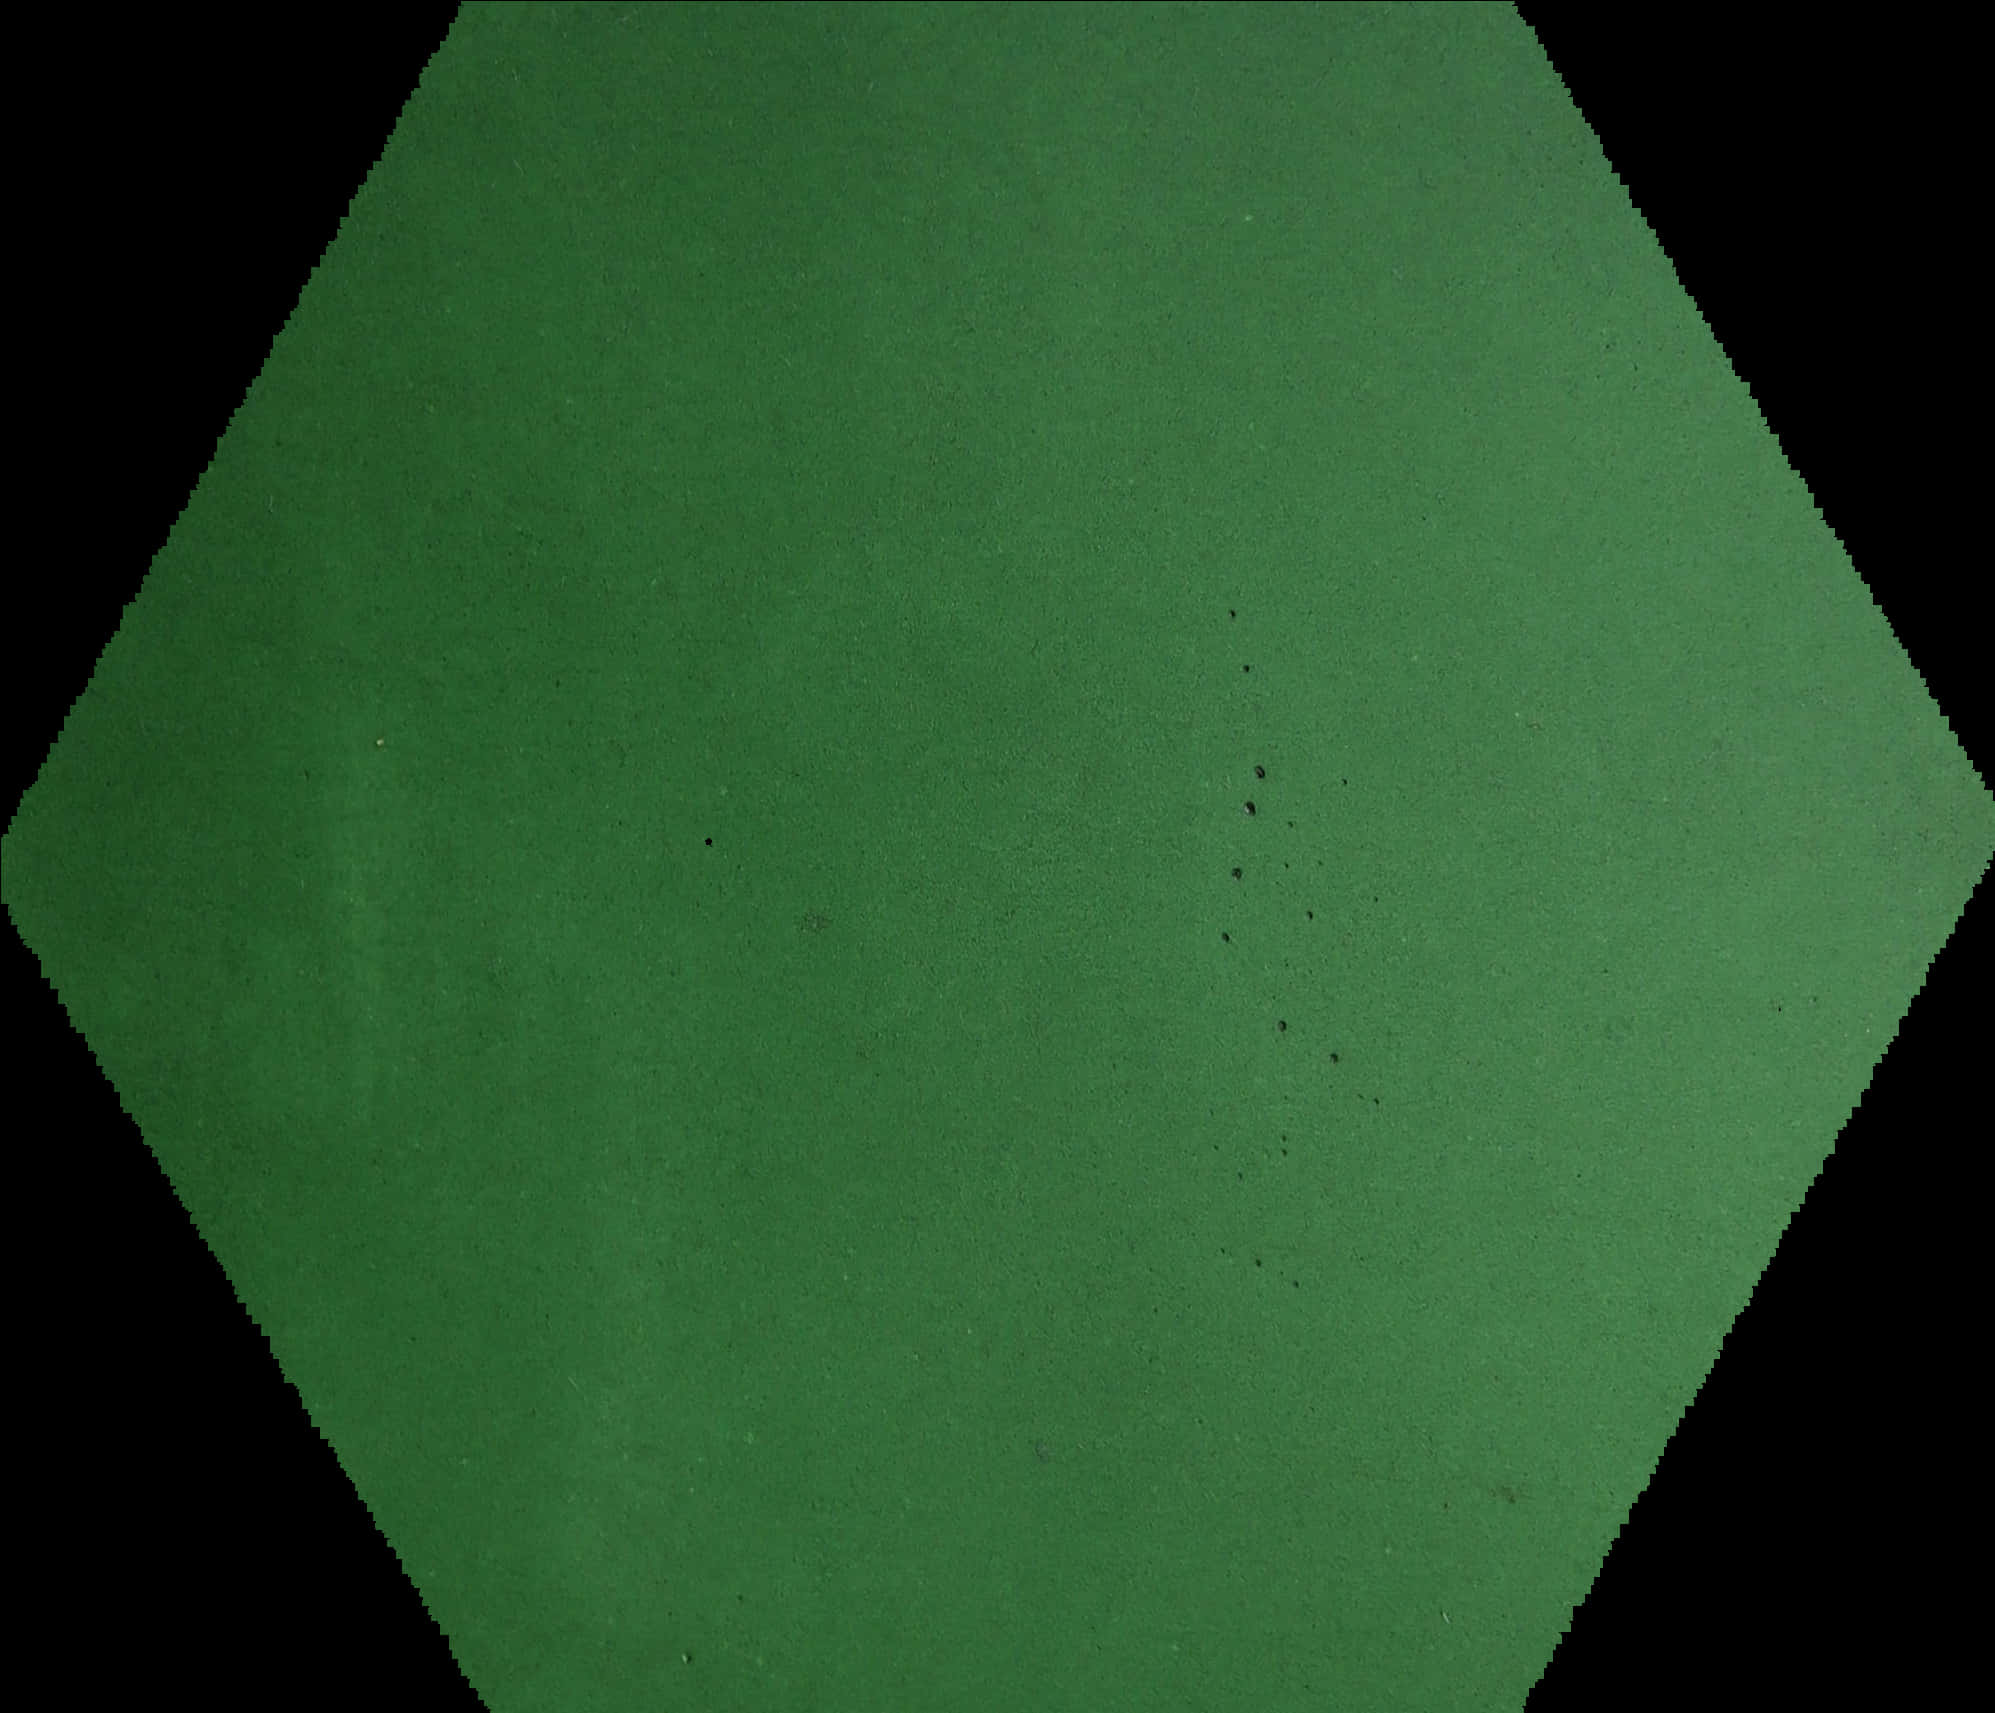 Green Hexagon Texture PNG image